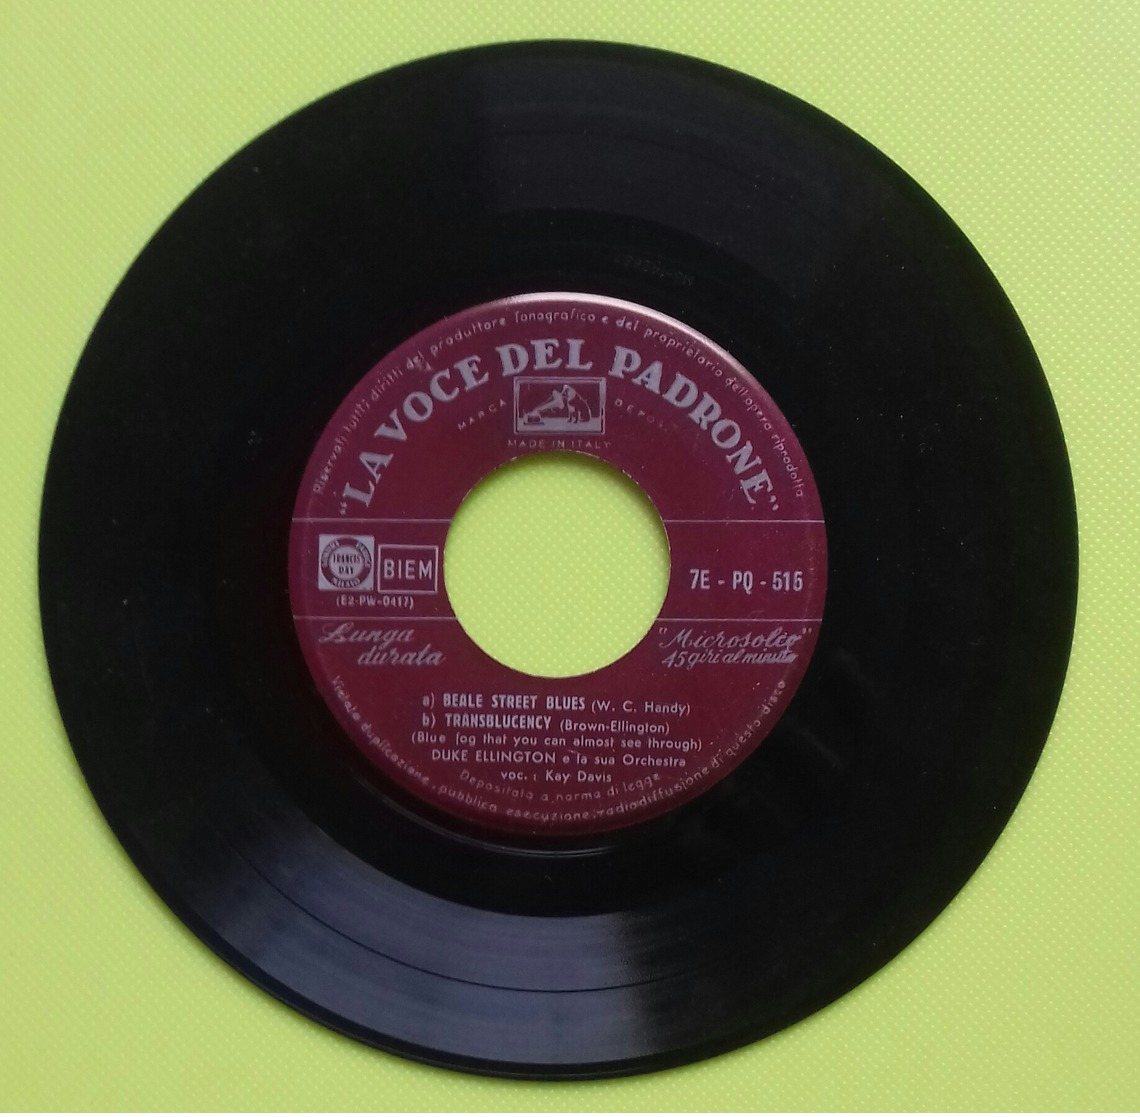 DUKE ELLINGTON - Beale Street Blues - EP 7" - 19-- - La Voce Del Padrone Records - Jazz